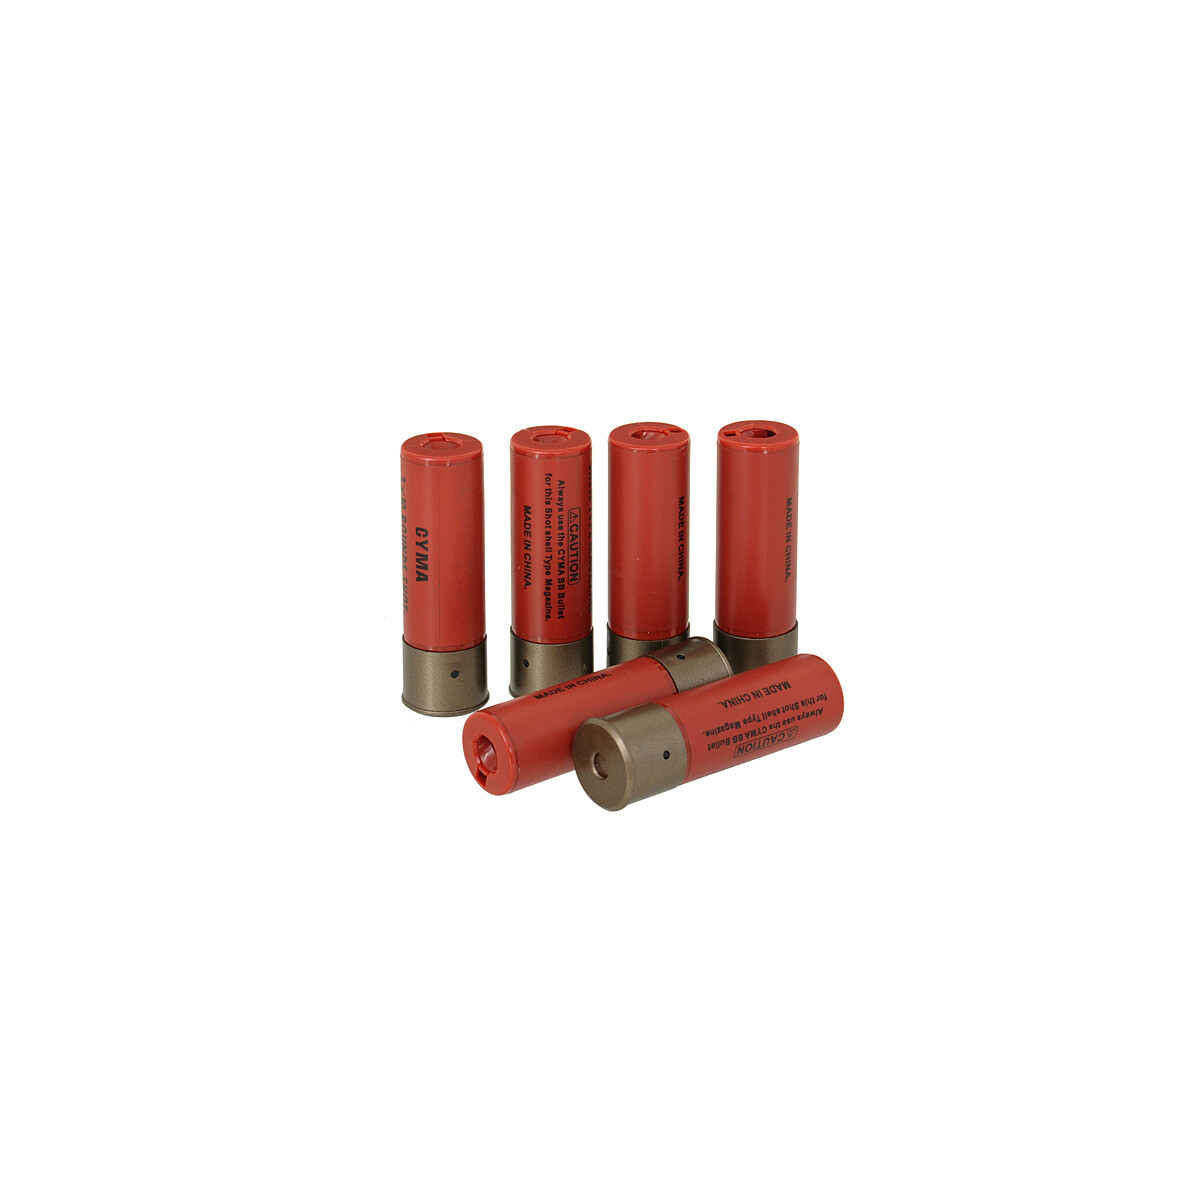 30rd Shells for Airsoft Shotguns (6 pack)